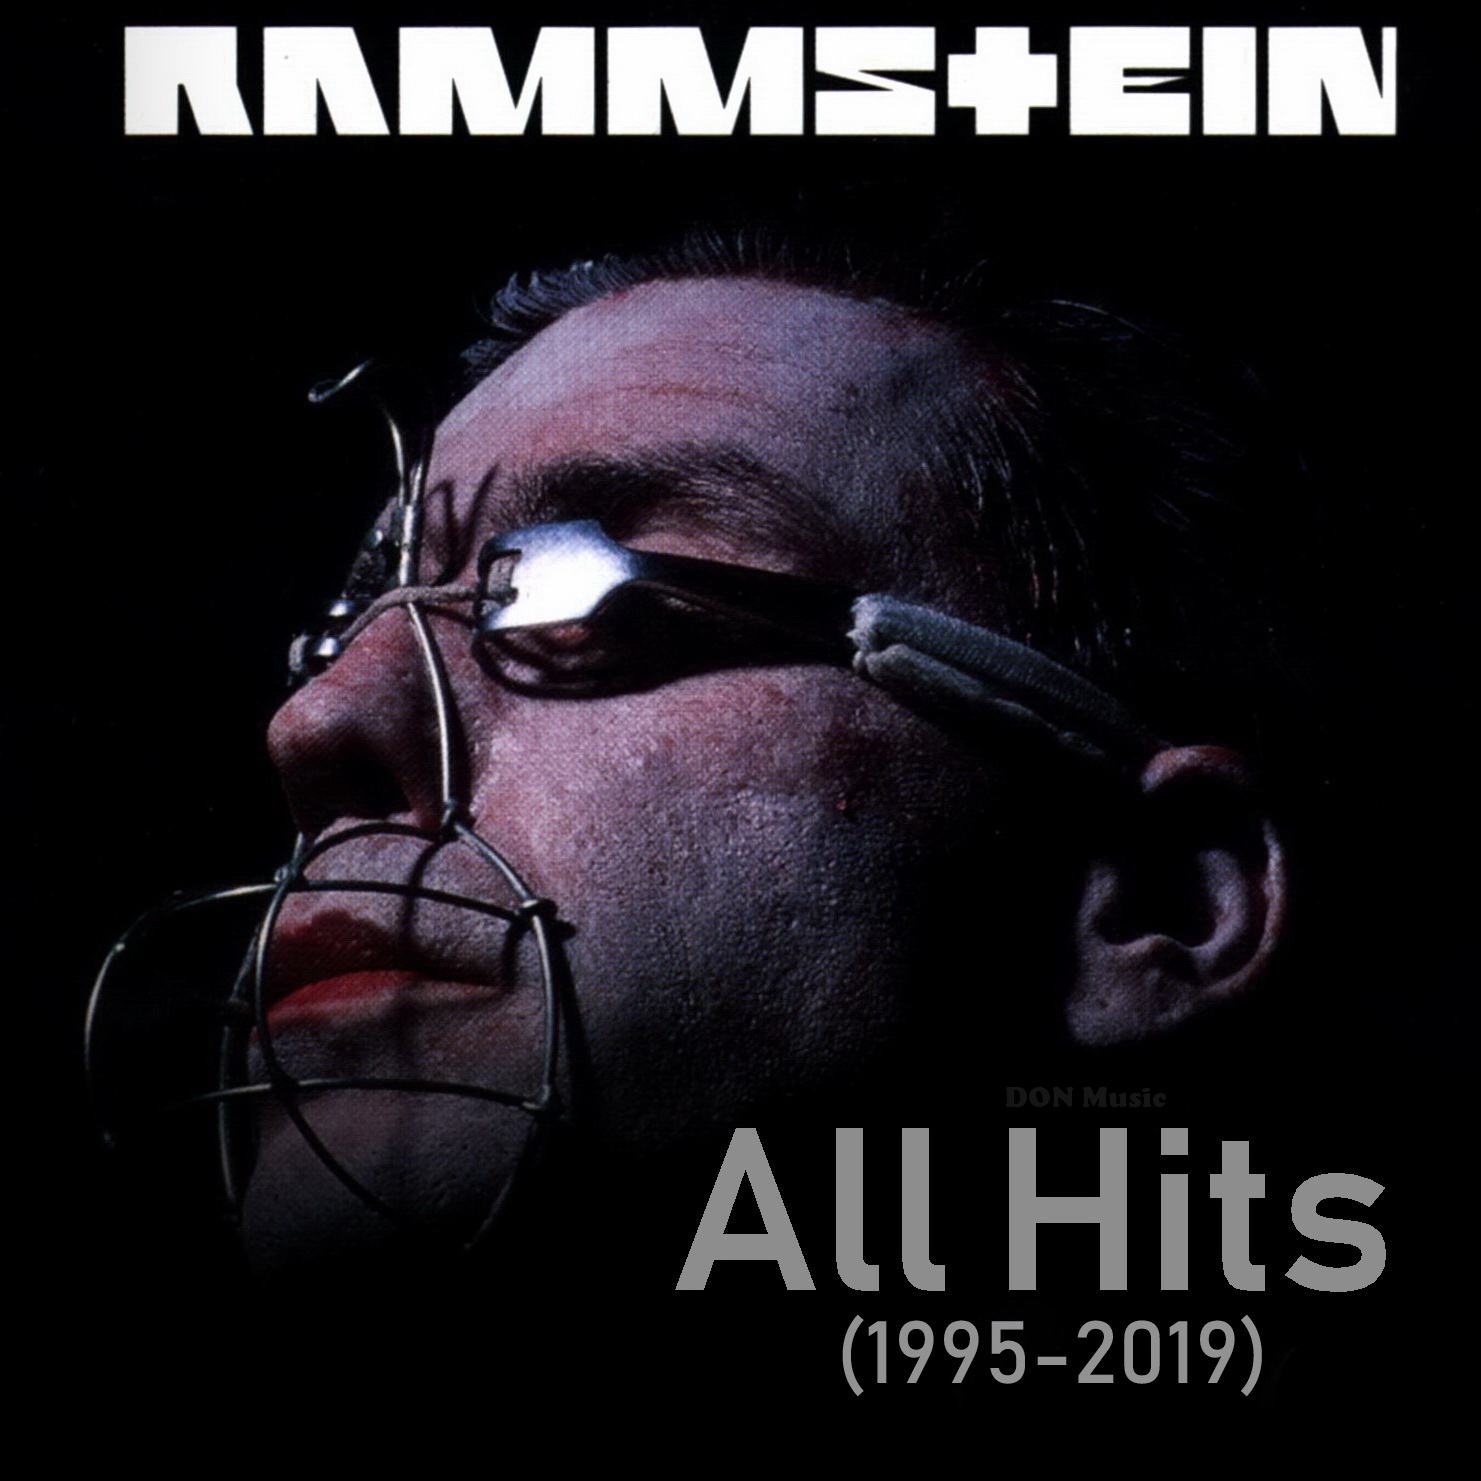 Rammstein - Du Riechst So Gut